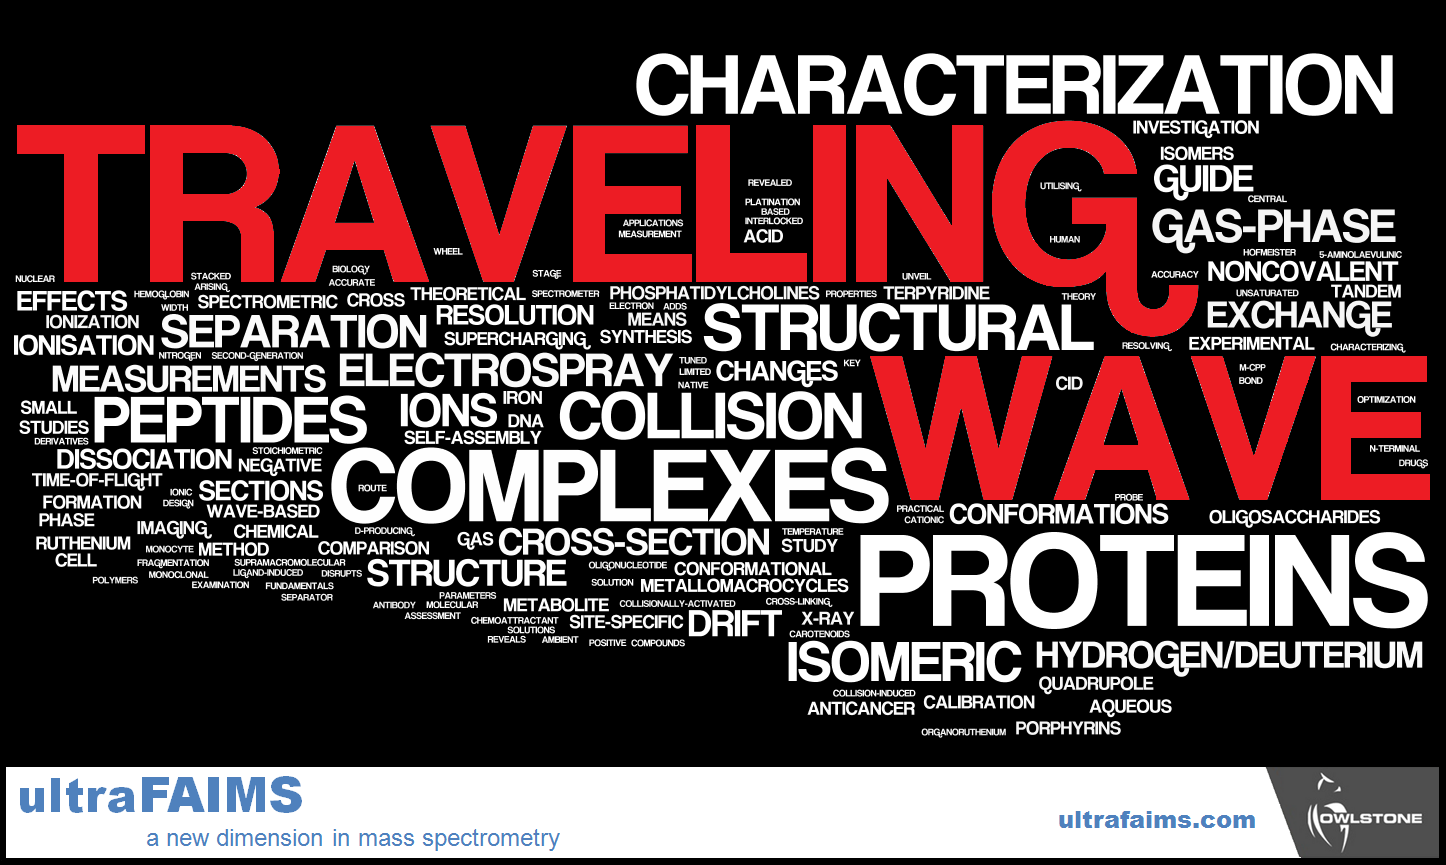 Travelling wave keyword analysis